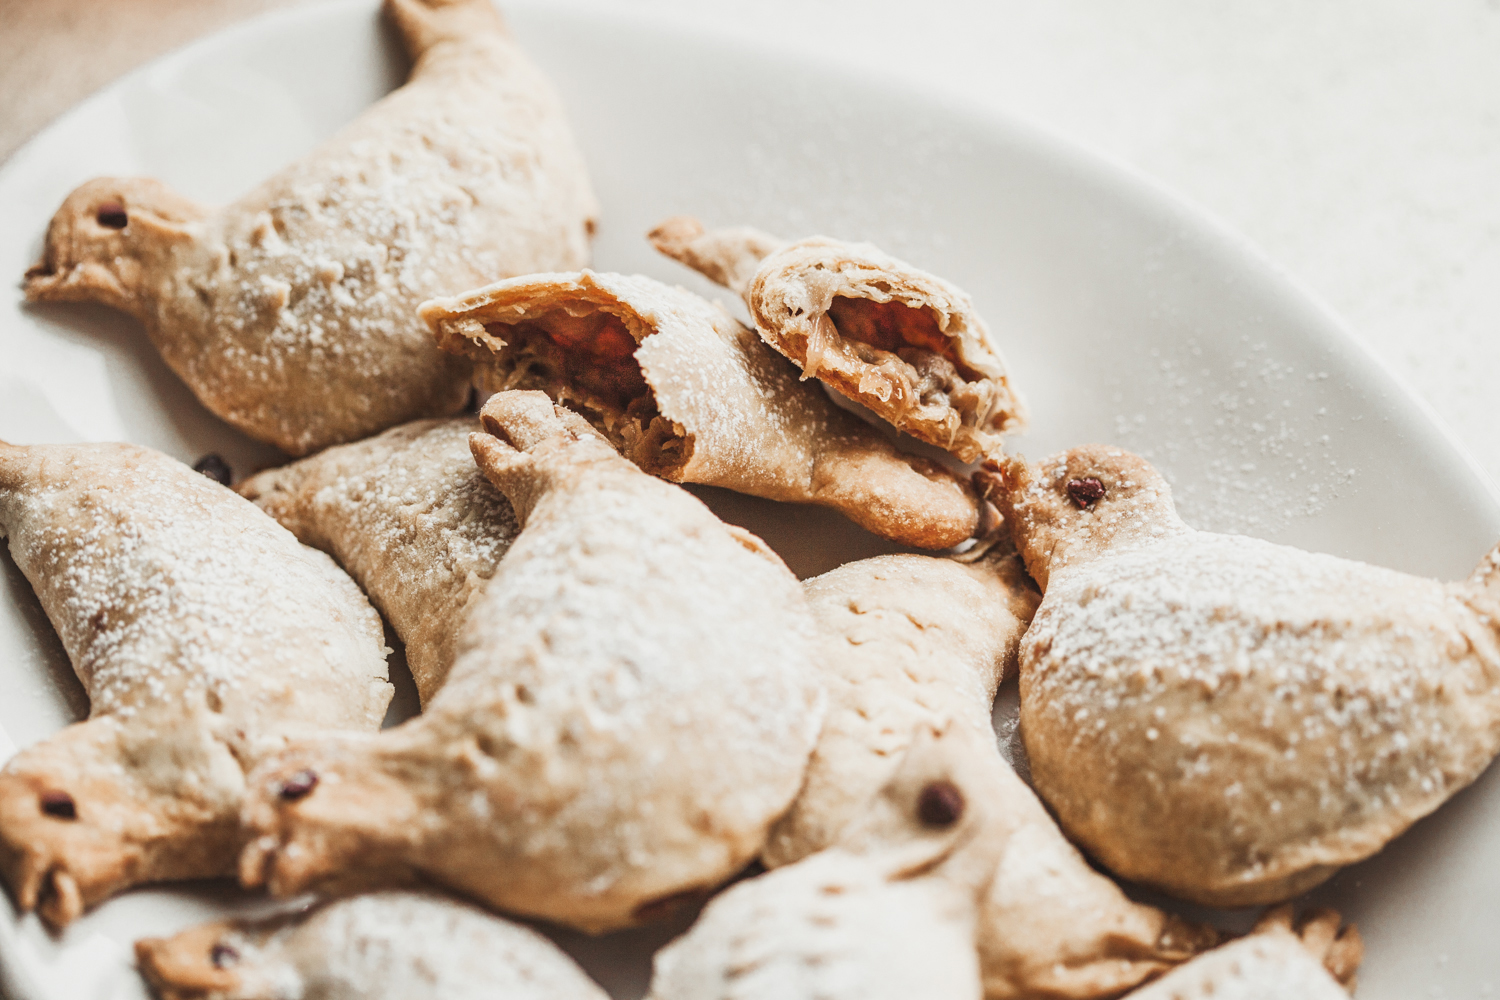 Rhubarb Celli Ripieni - Old School Jam Cookies from Abruzzo, Join our Vegan Retreat in Abruzzo! - Golubka Kitchen